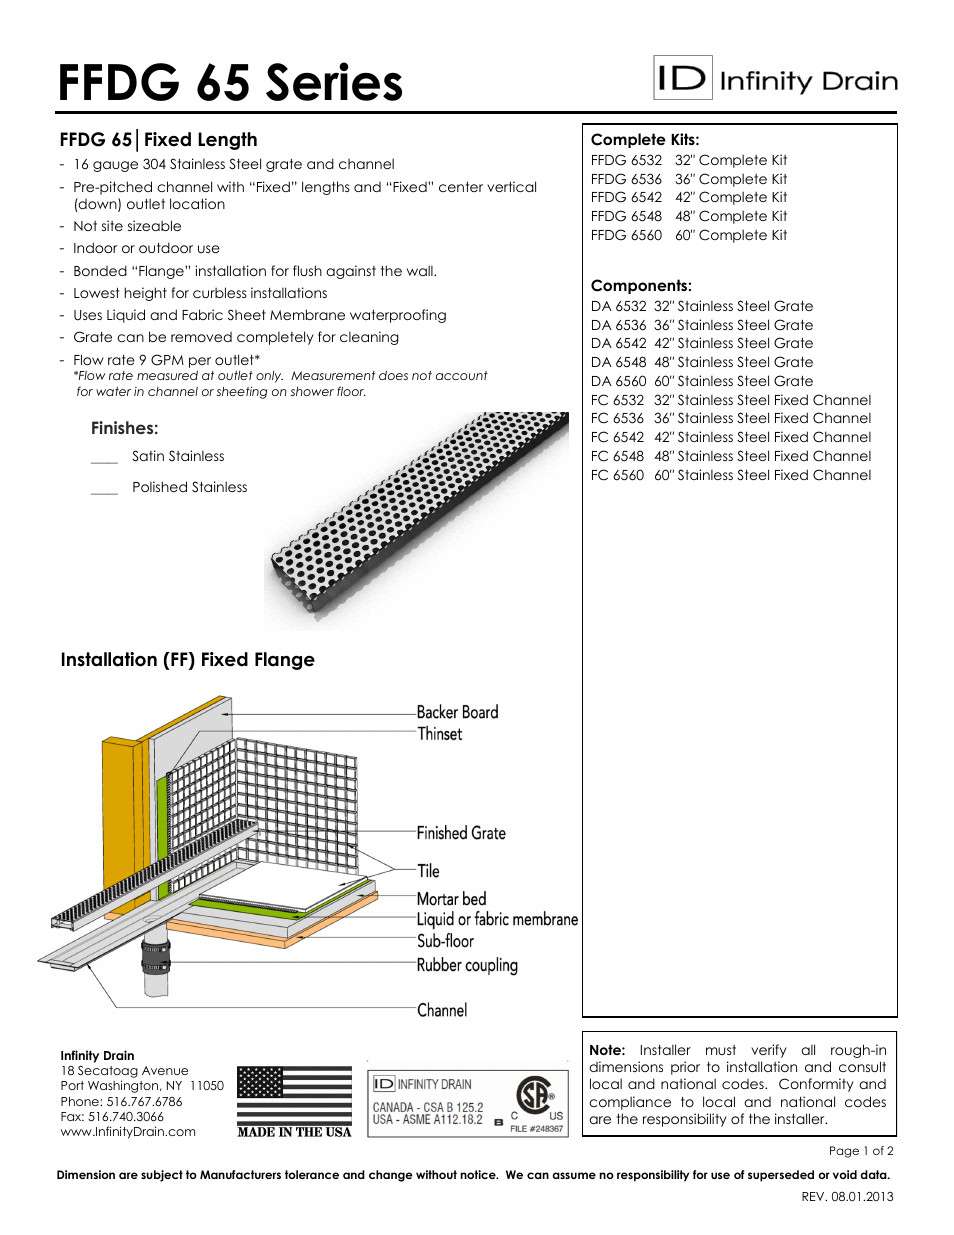 FFDG 6542 Series Submittal Sheet